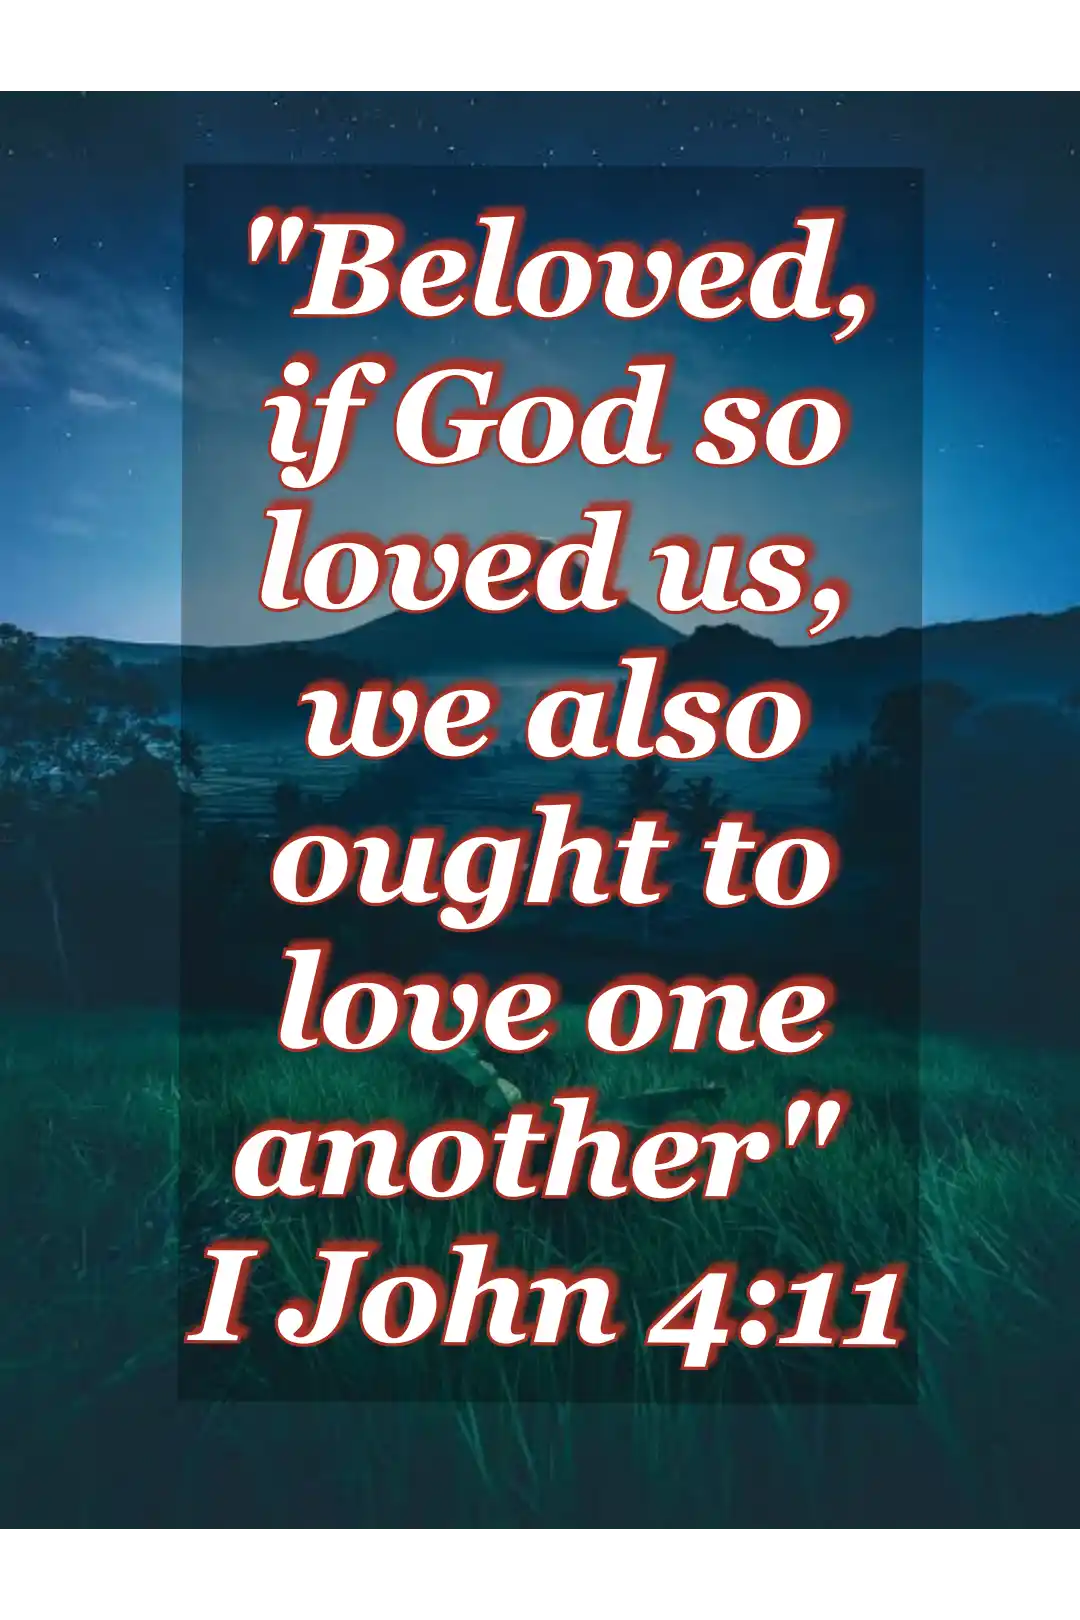 bibile-verses-about-friendship (1 John 4:11)